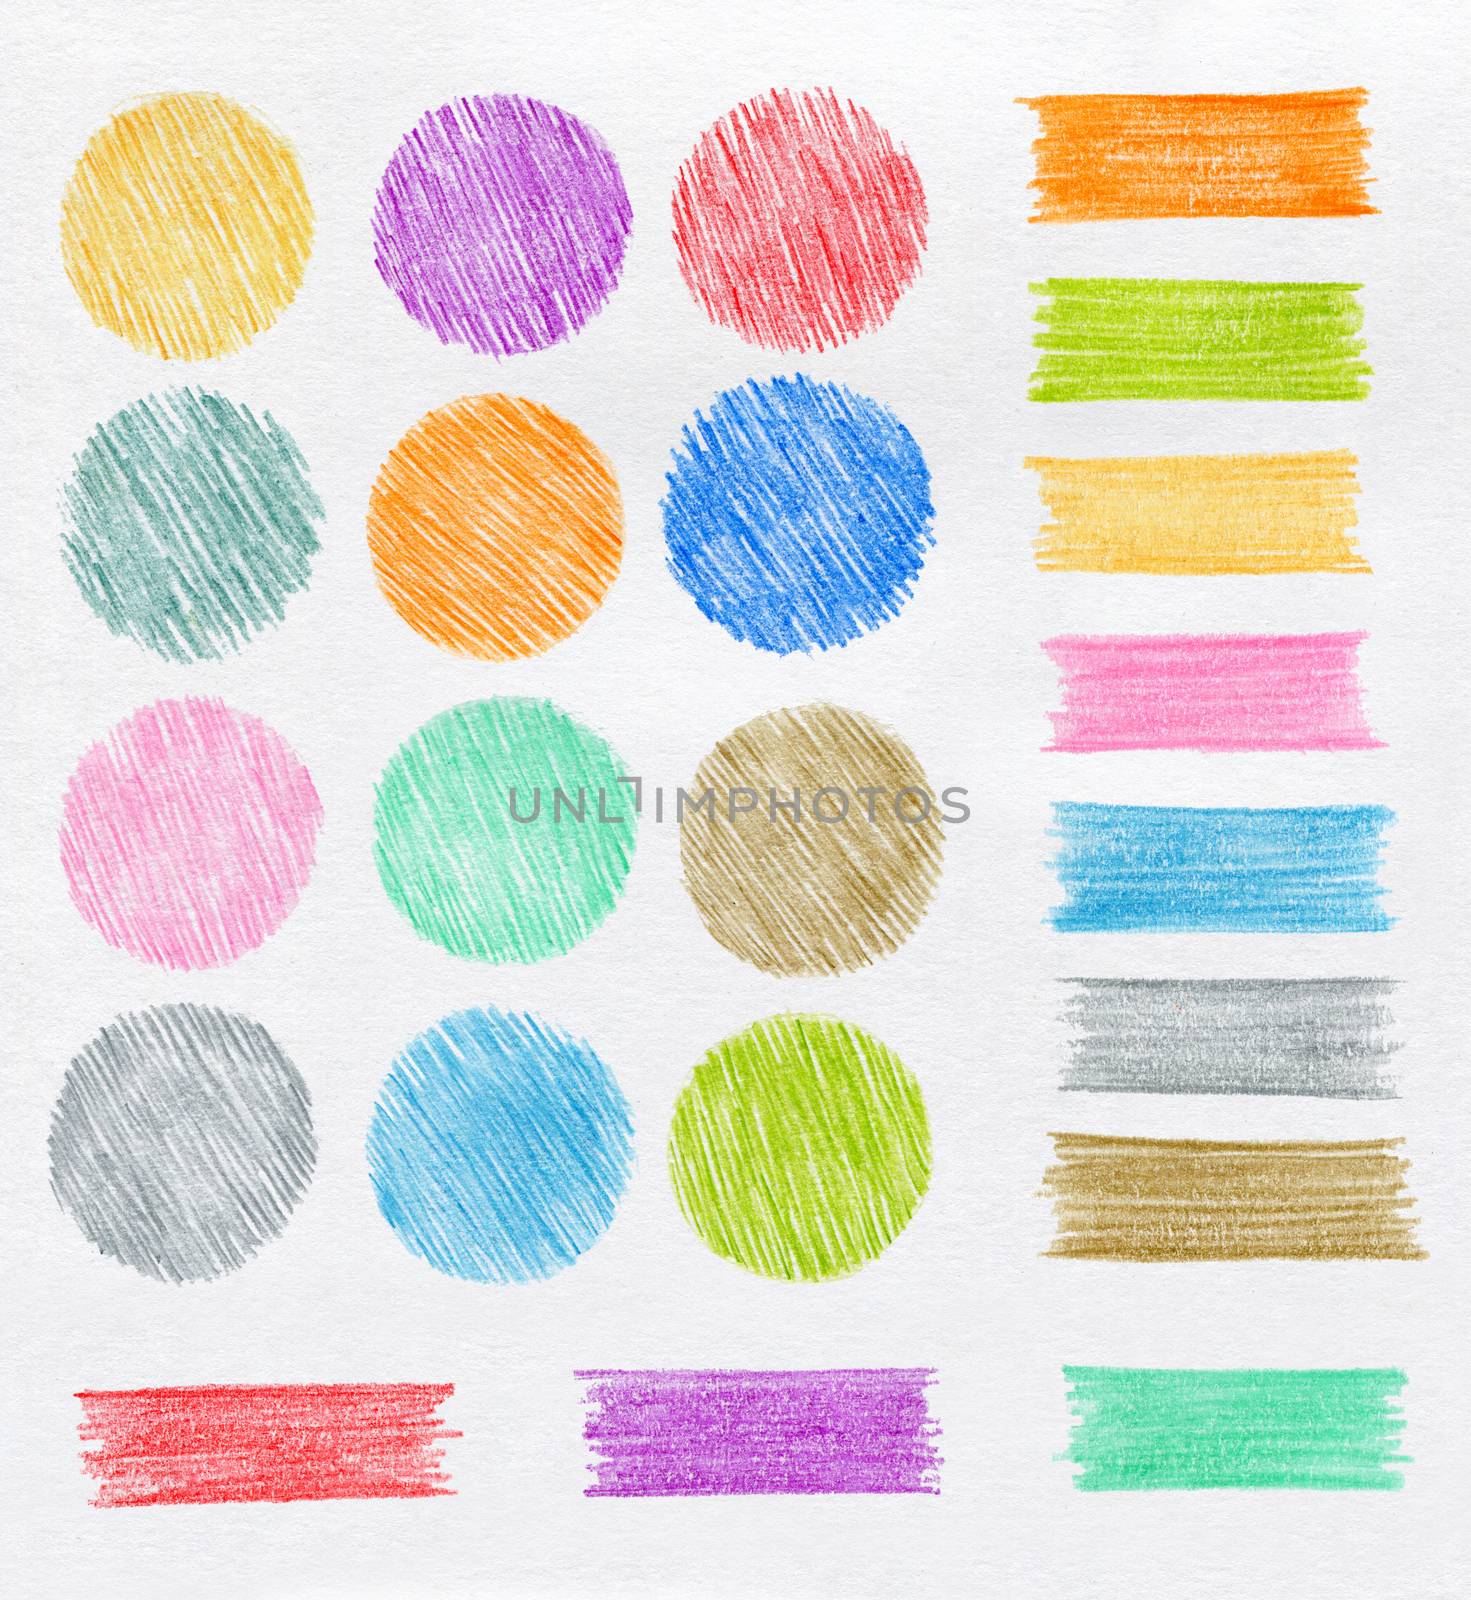 Set of color pencil design elements by rudchenko